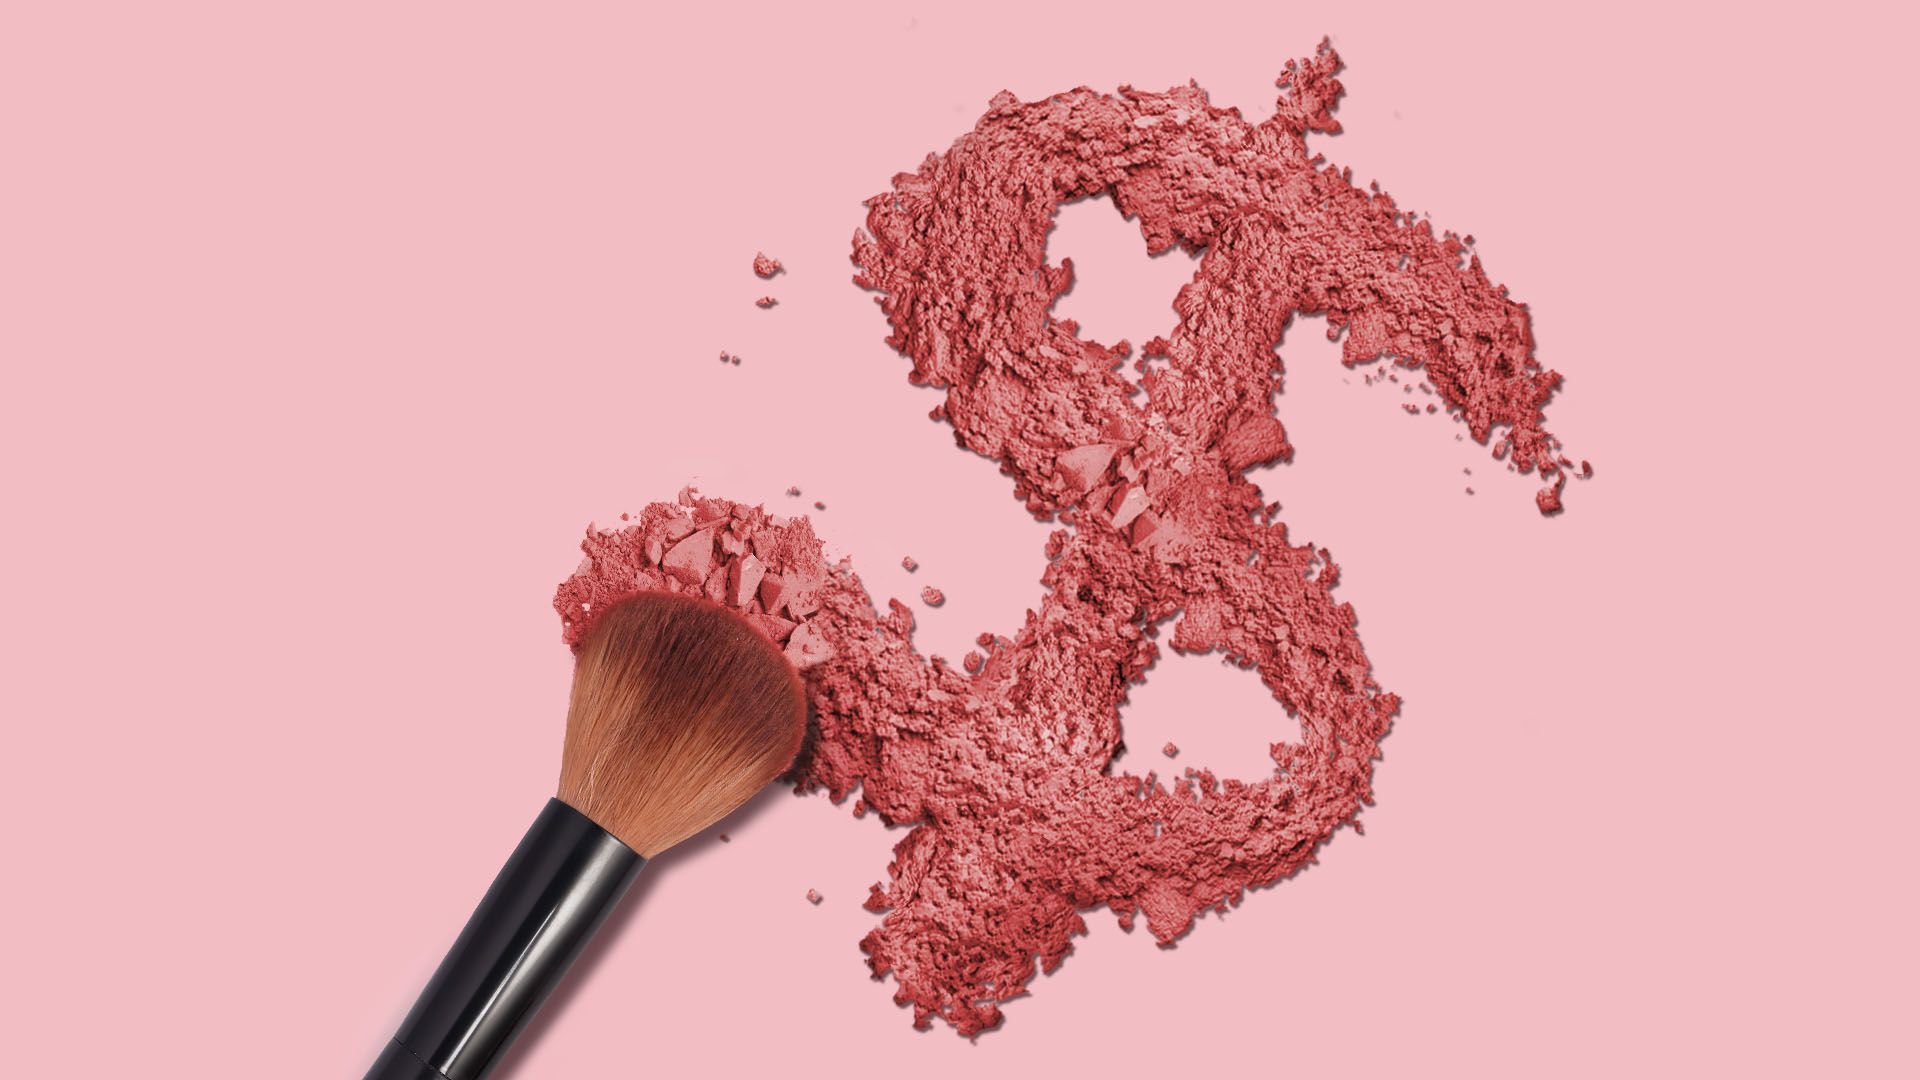 illustration of loose pink makeup powder in shape of a dollar symbol next to a makeup brush